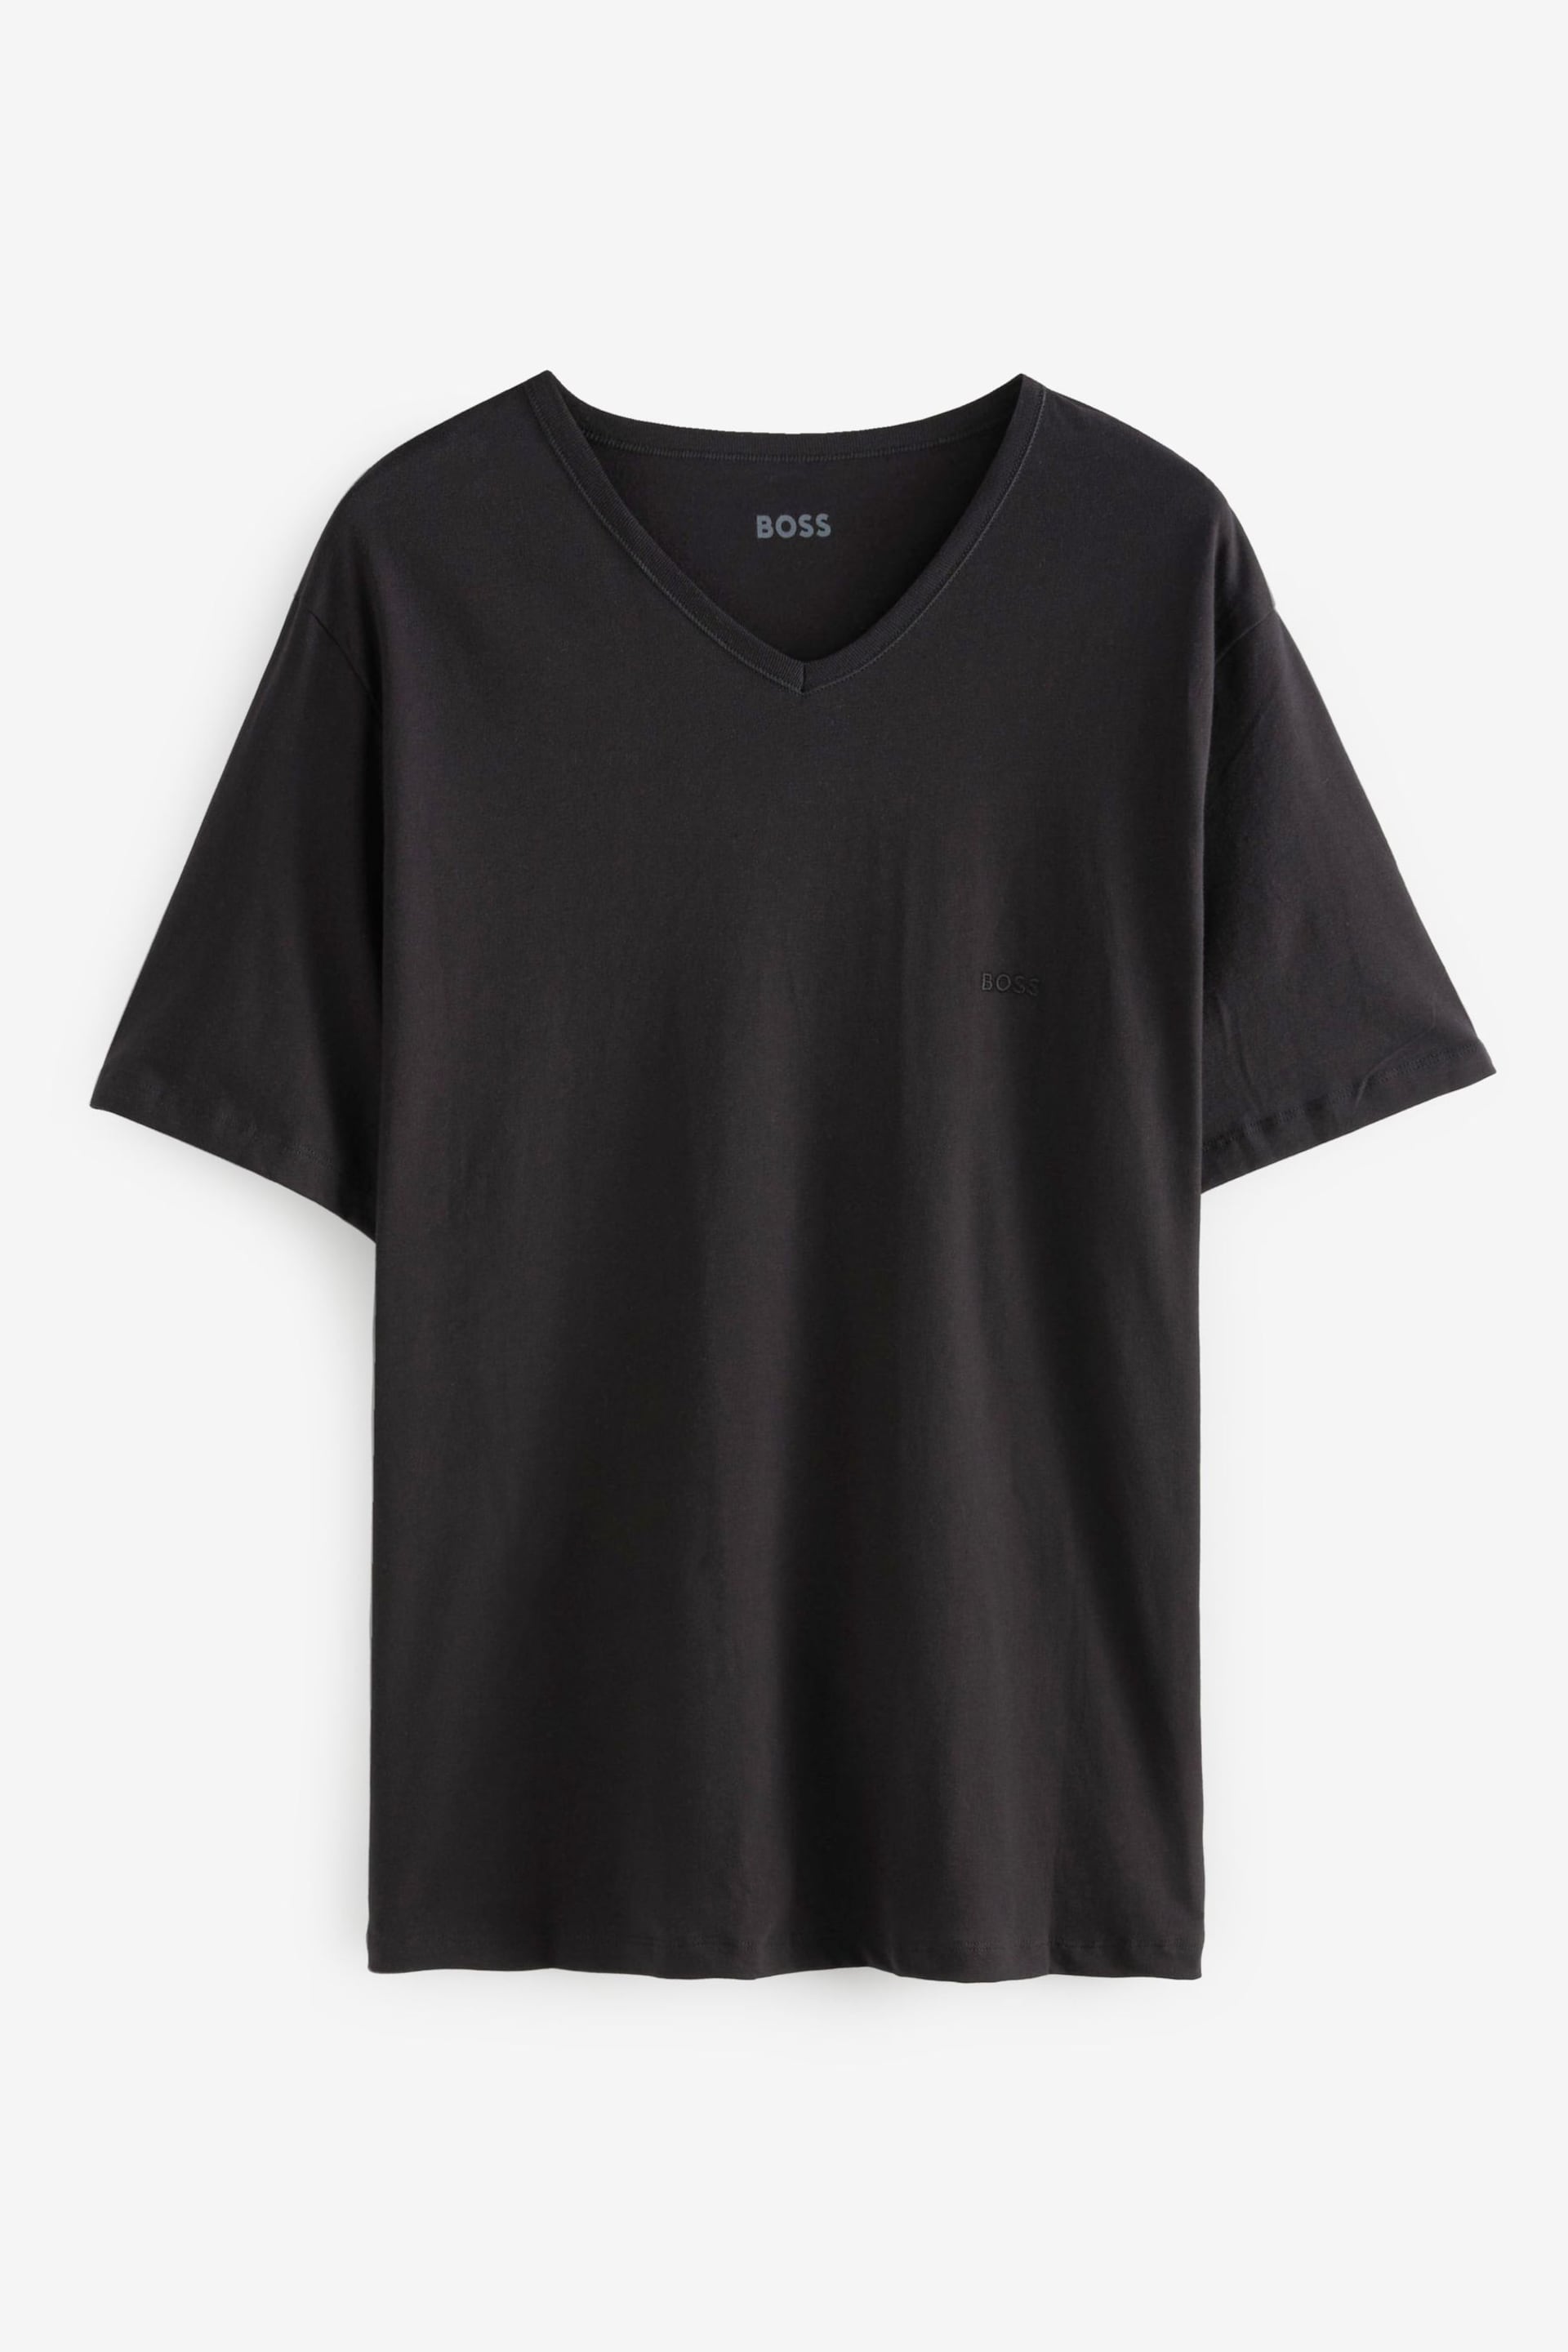 BOSS Black Classic V-Neck T-Shirts 3 Pack - Image 3 of 9